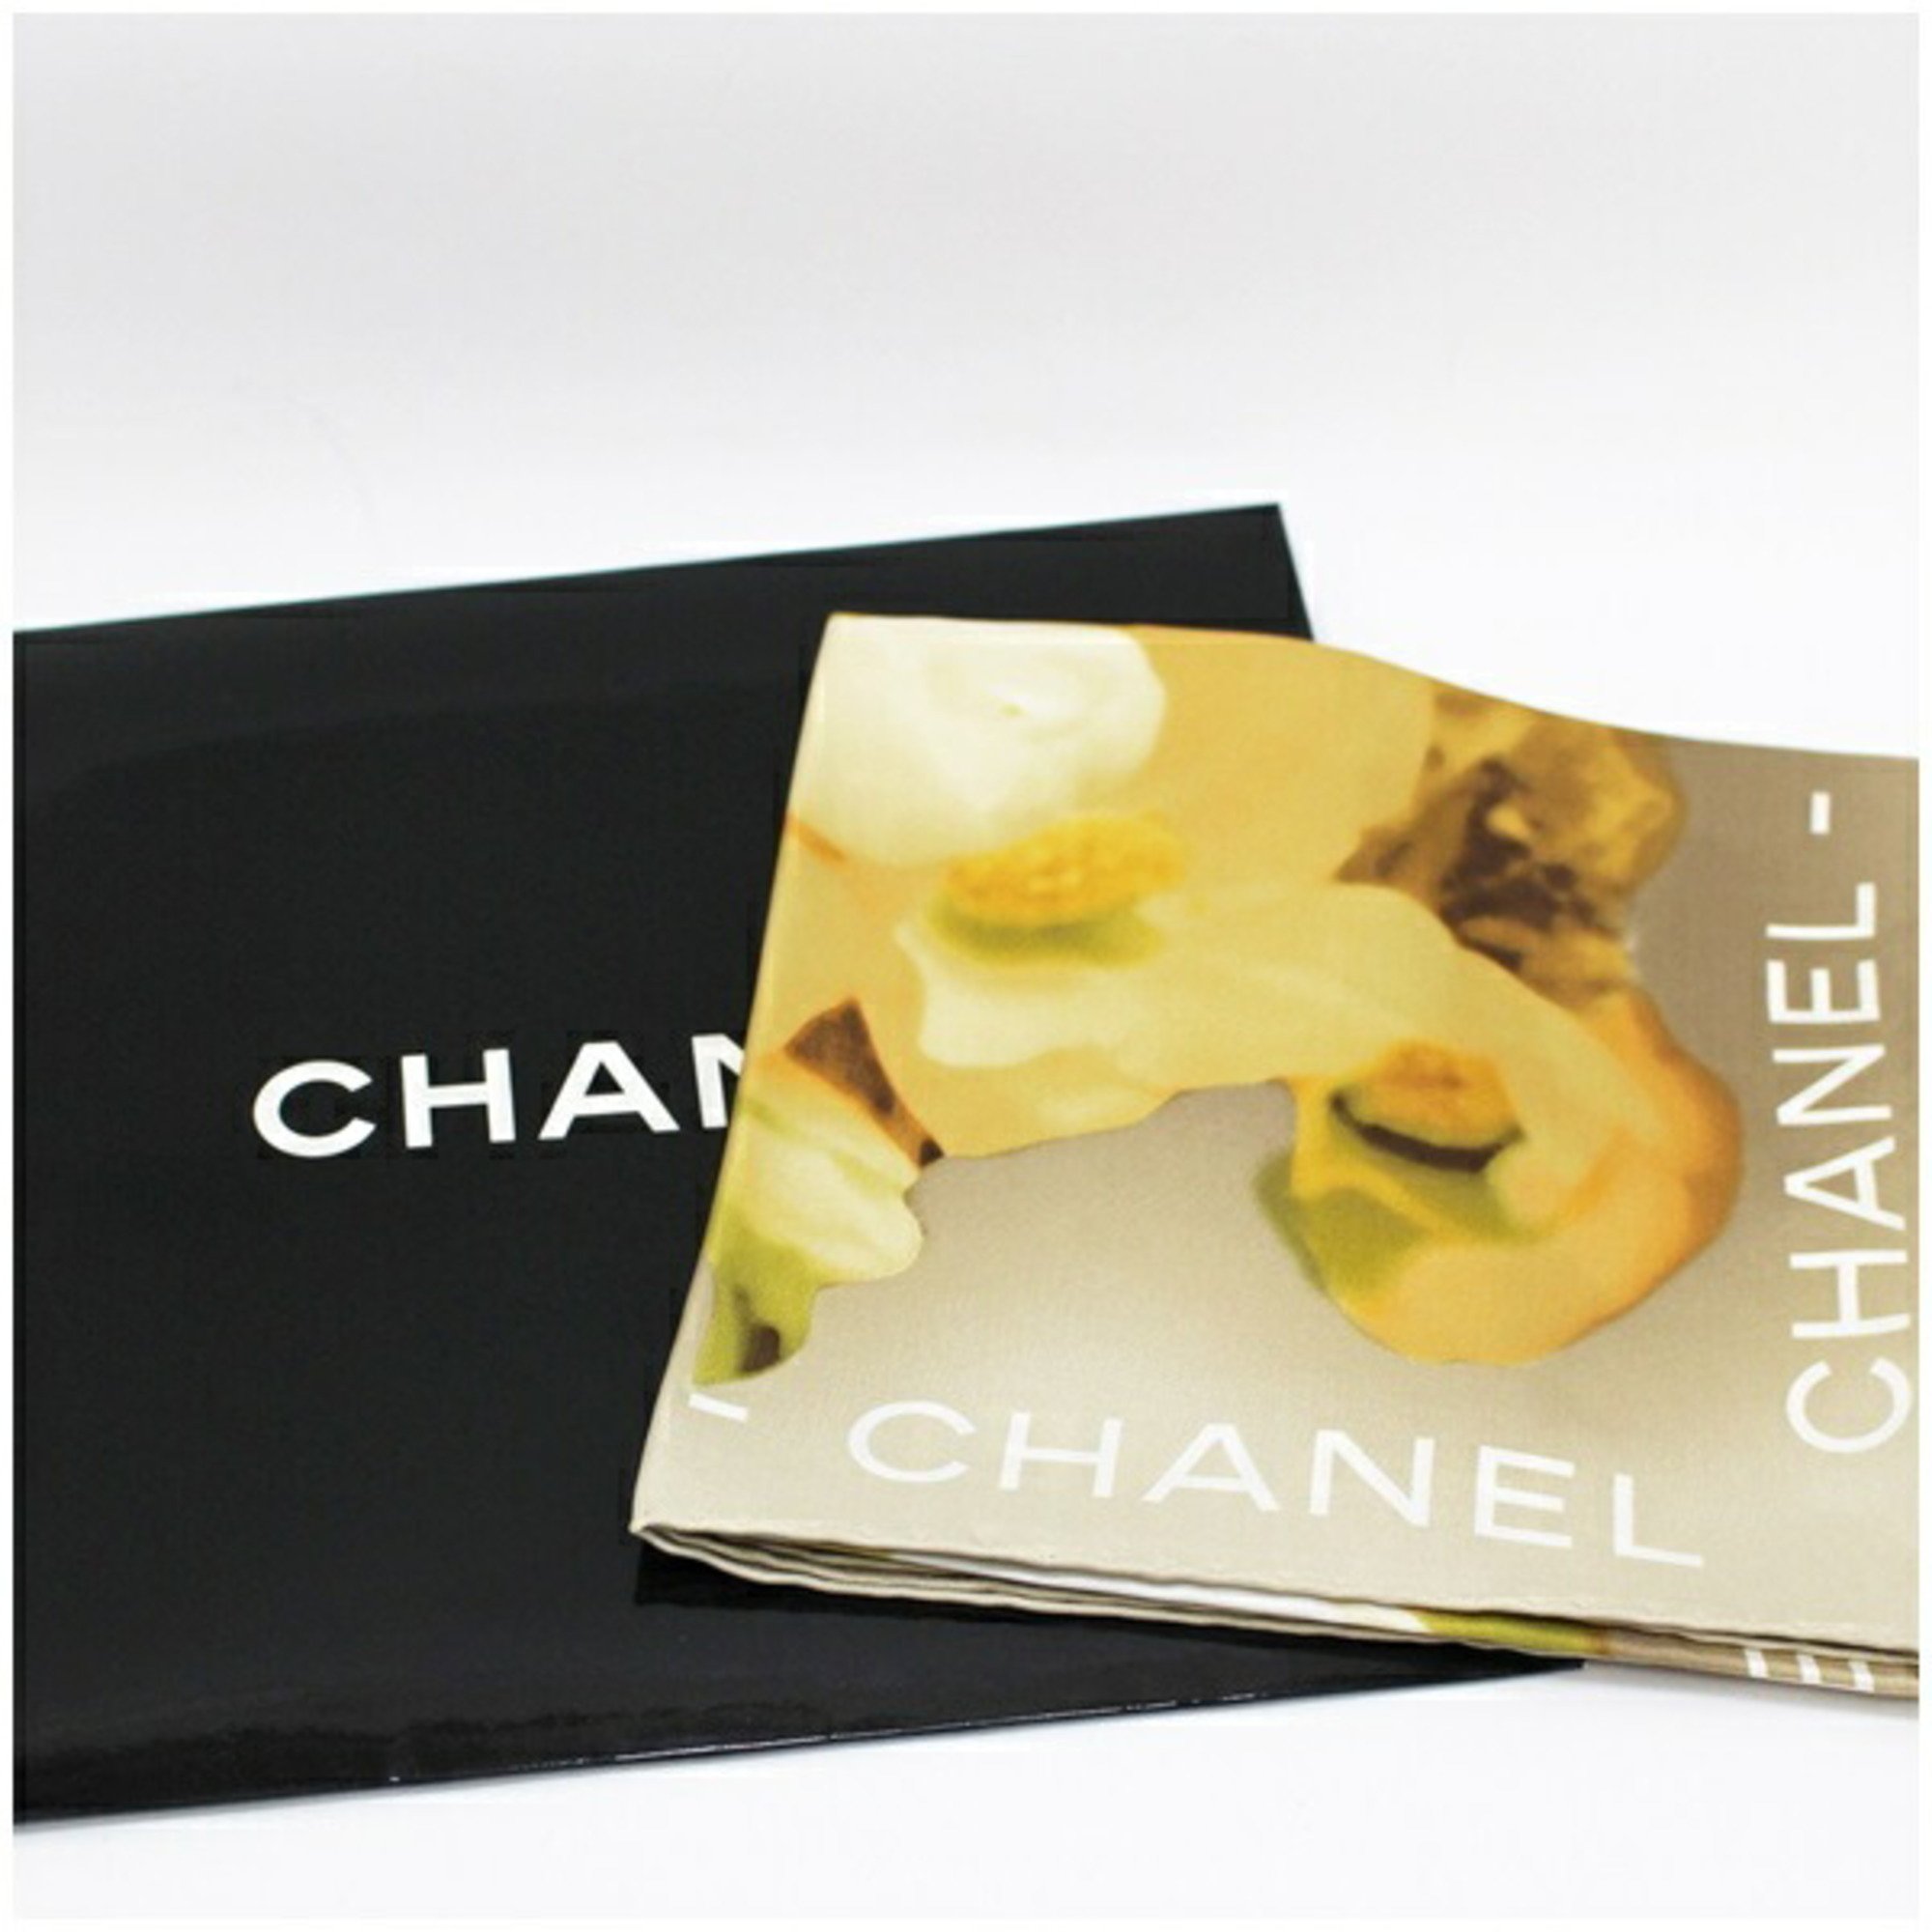 Chanel silk scarf muffler 31 RUE CAMBON beige camellia CHANEL ladies